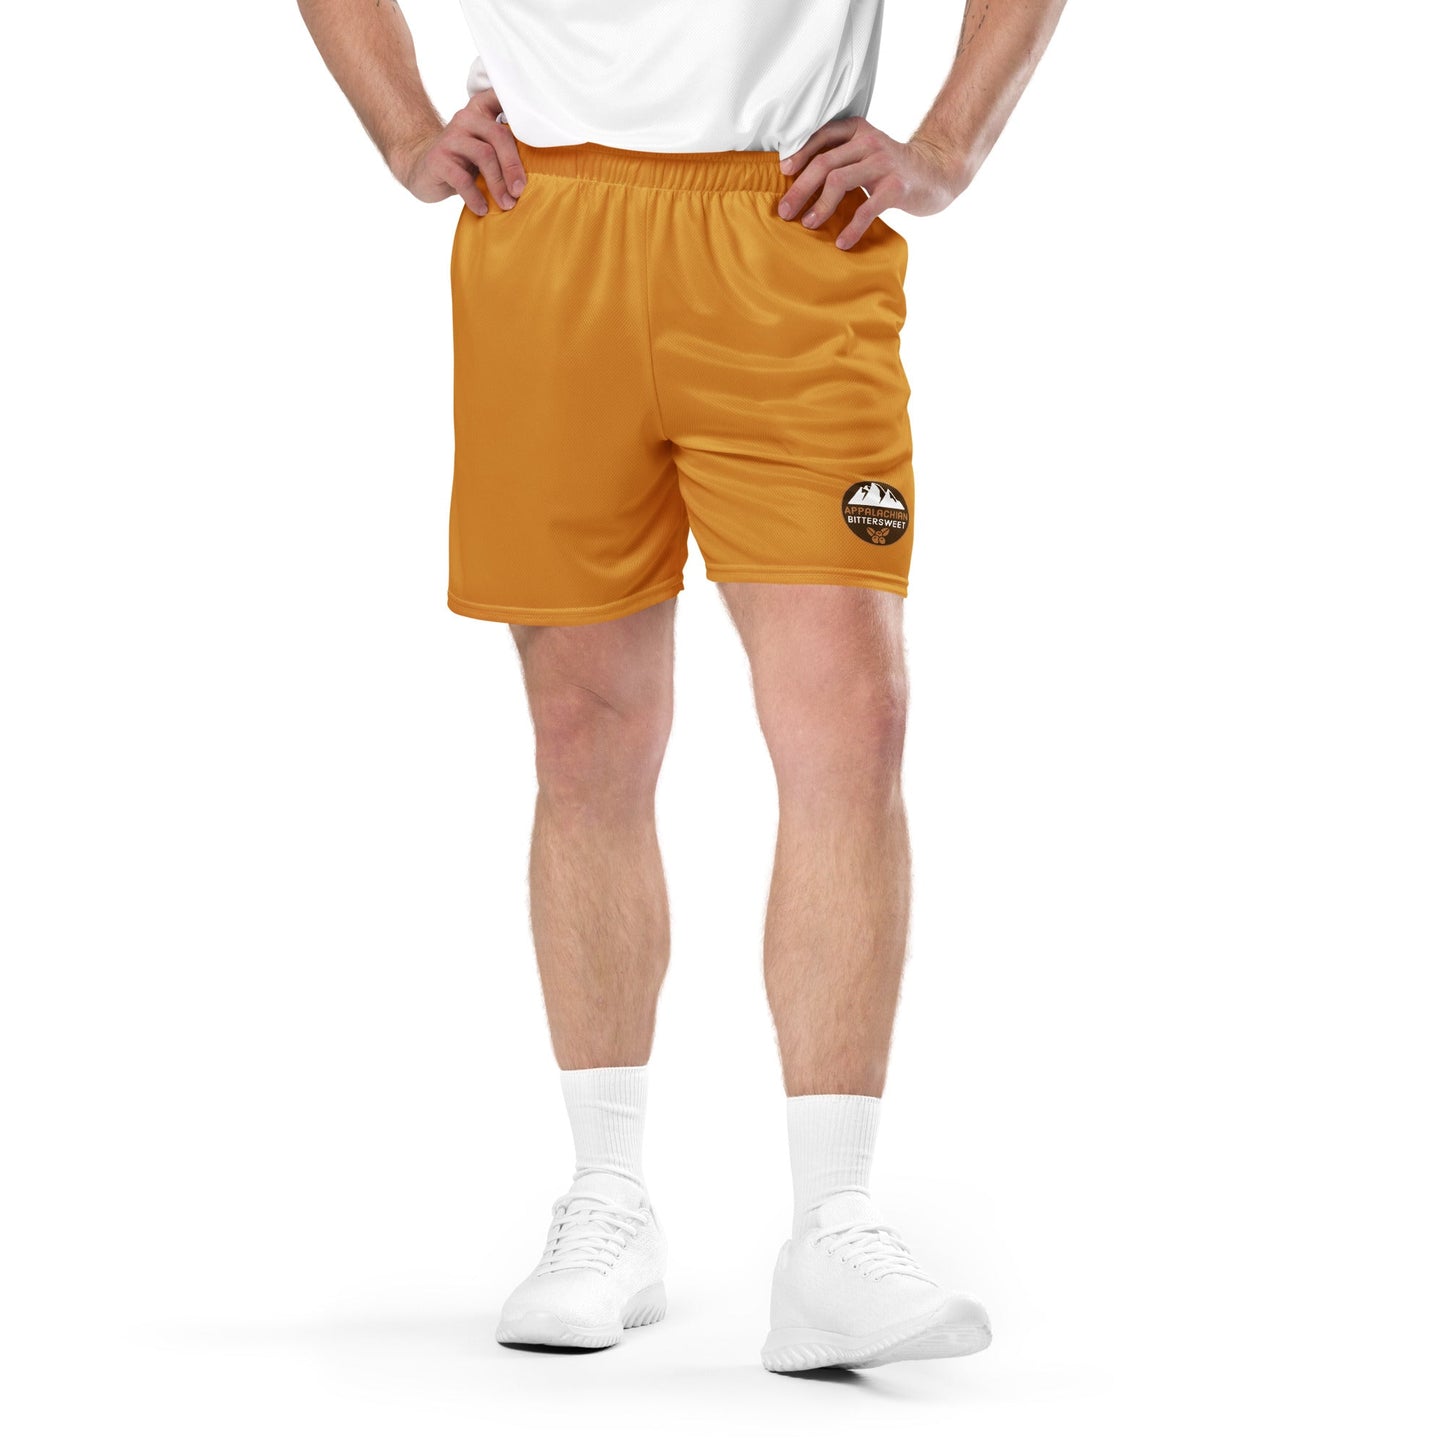 Goldenrod Recycled Unisex Comfort Mesh Hiking Shorts - Appalachian Bittersweet - Shorts